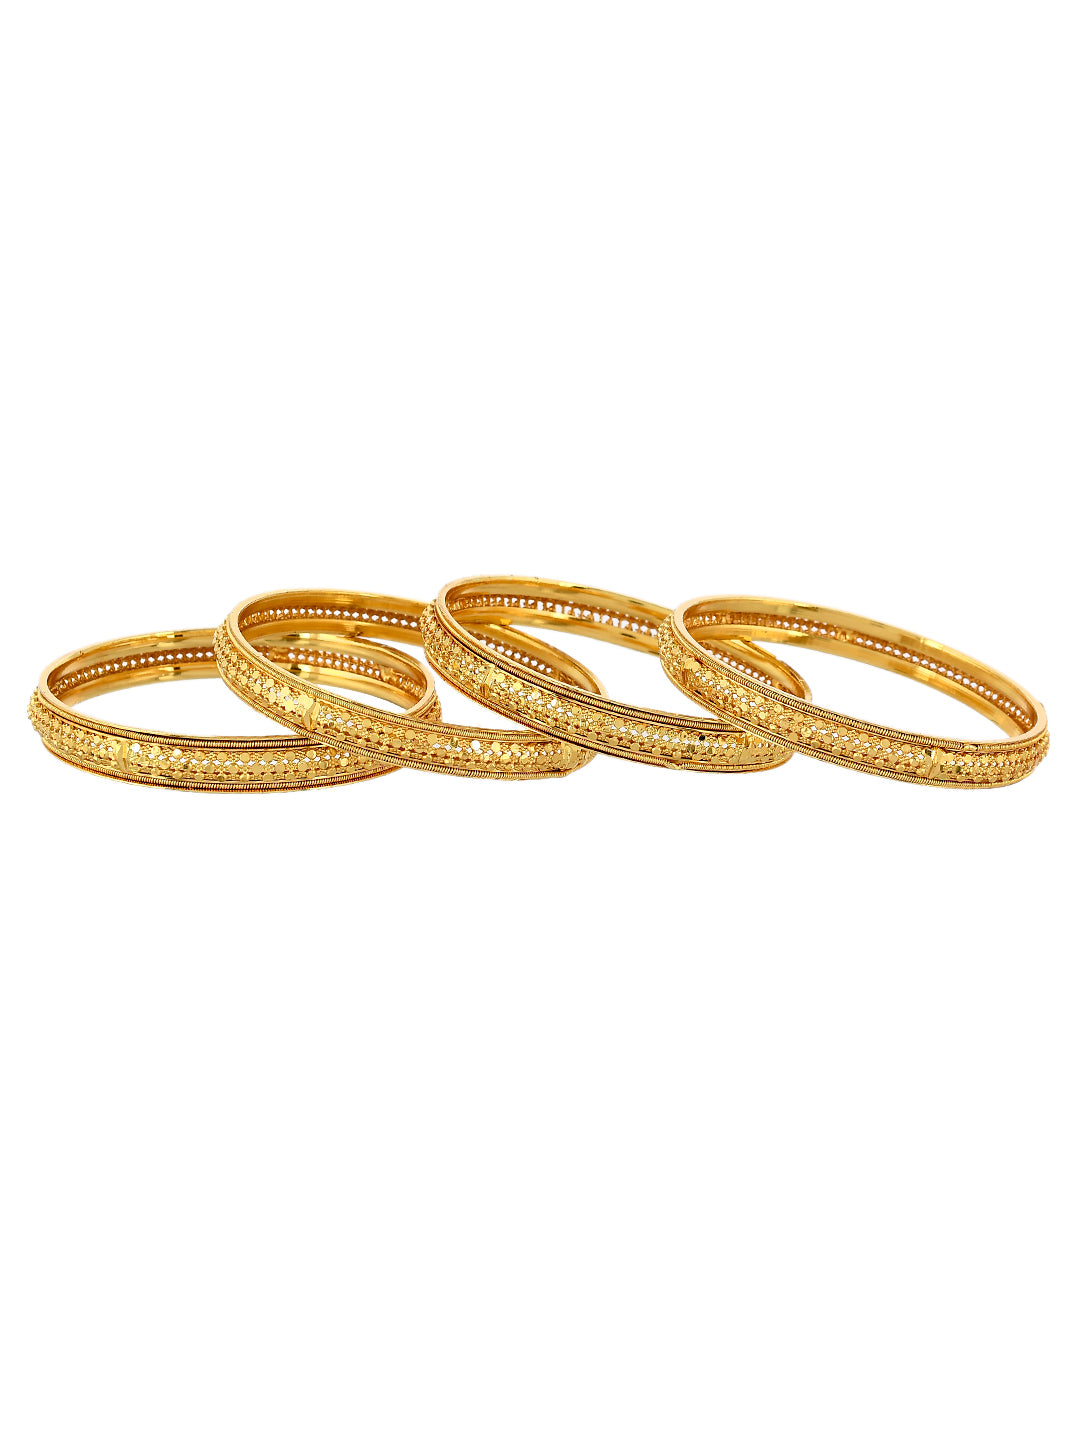 Desginer Set Of 4 Gold Plated Metal Bangles For Women